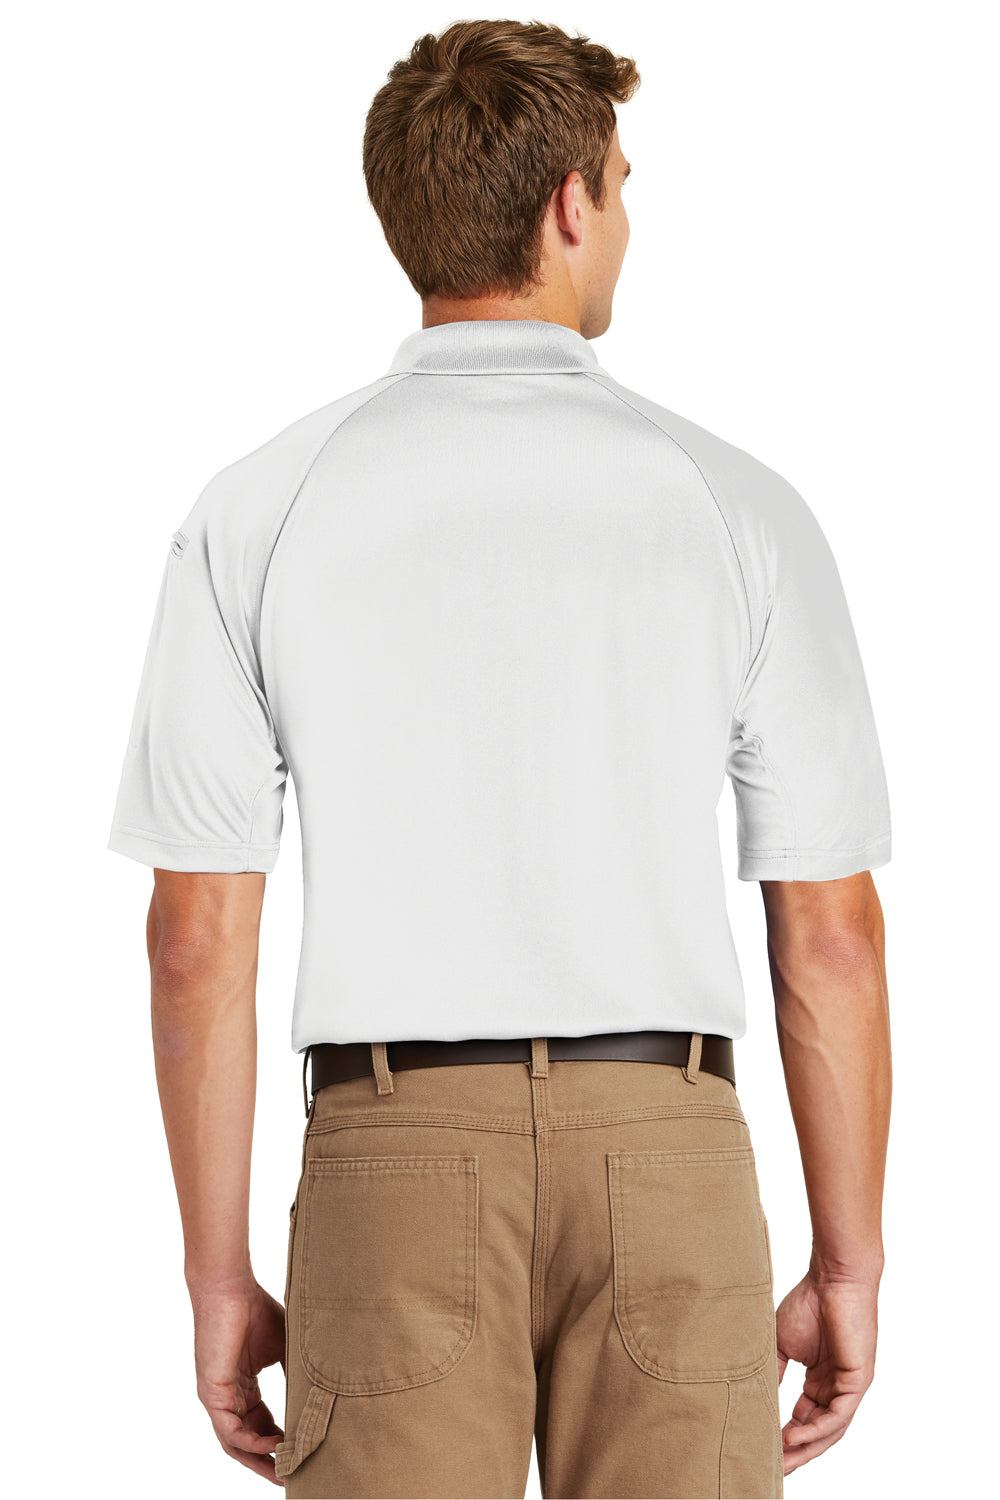 CornerStone CS410 Mens Select Tactical Moisture Wicking Short Sleeve Polo Shirt White Back